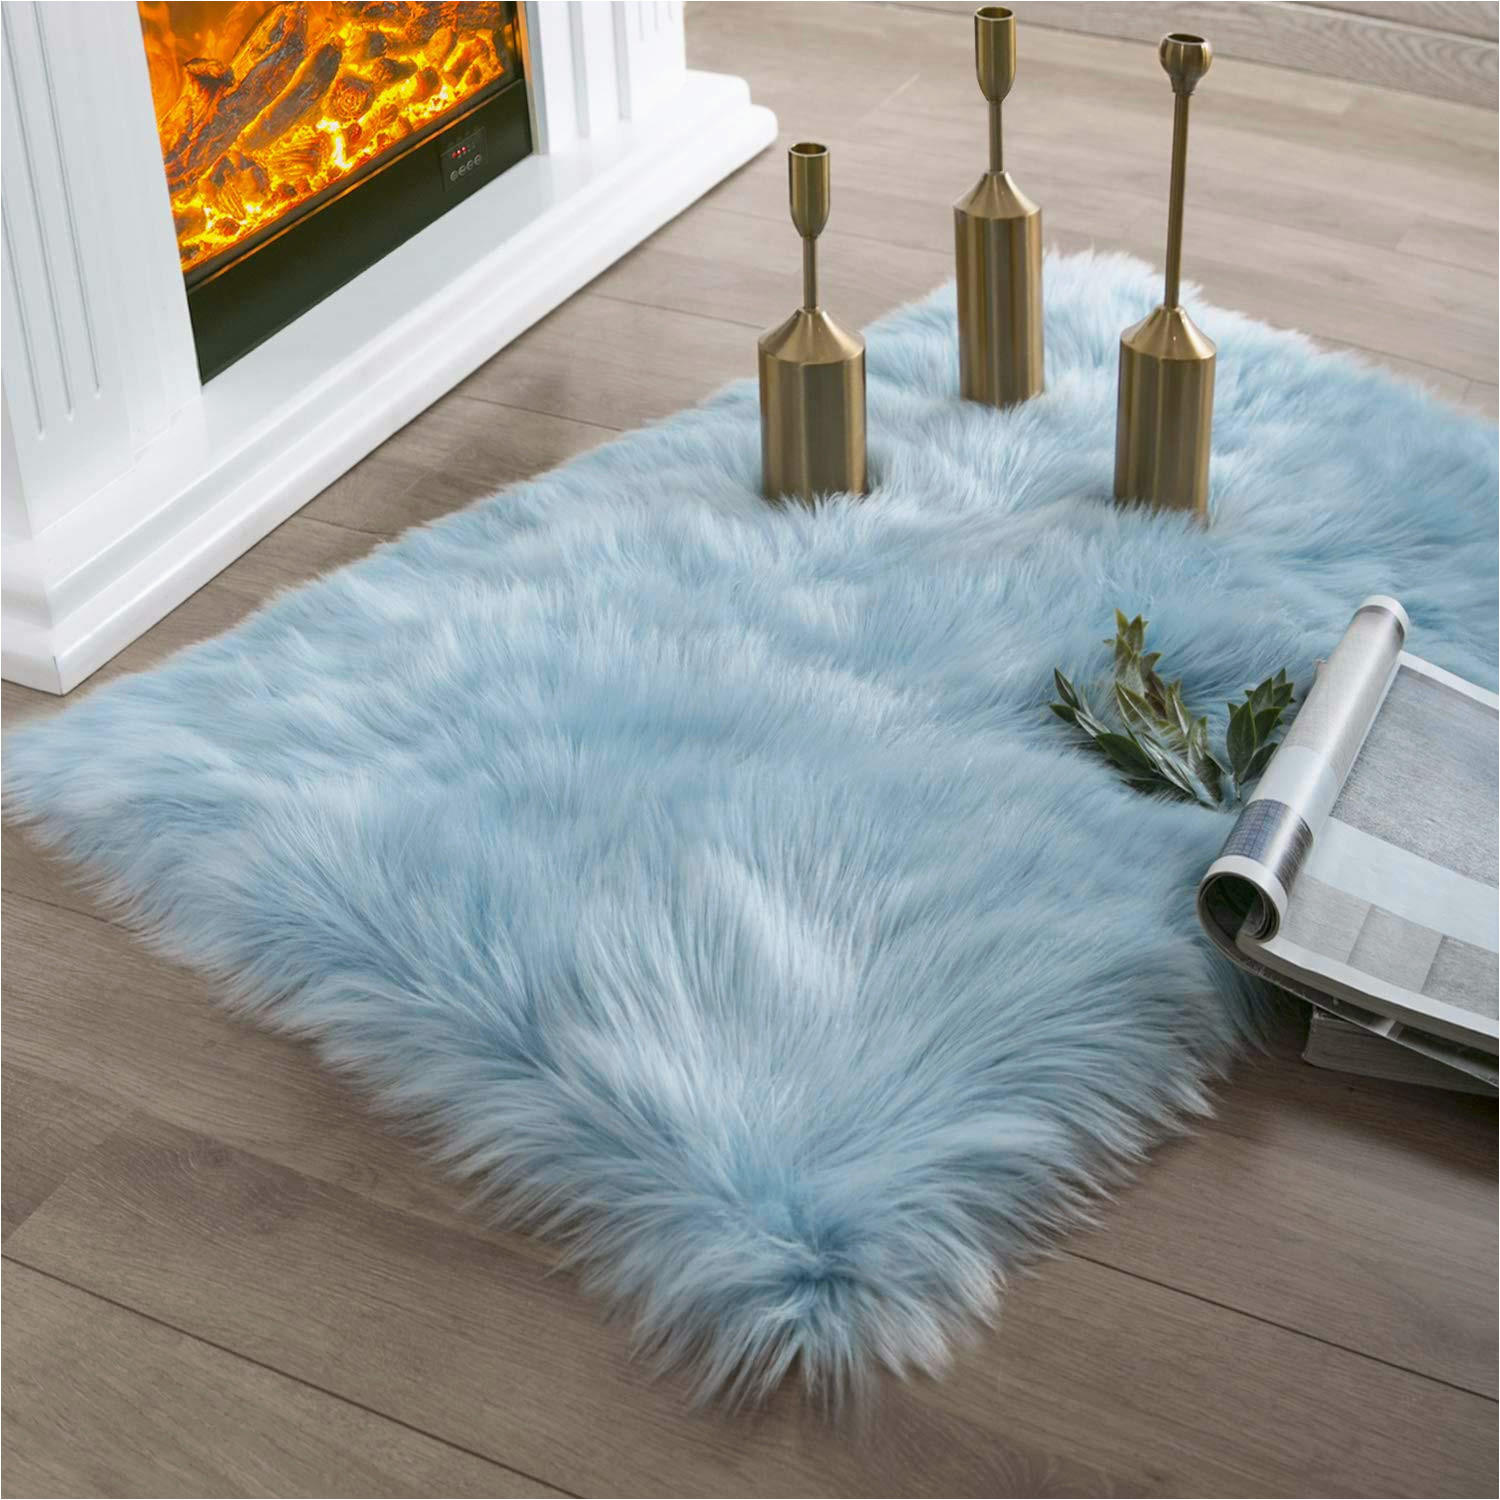 Light Blue Fuzzy Rug Amazon.com: ashler Faux Fur Rug, Fluffy Shaggy area Rug Ultra soft …